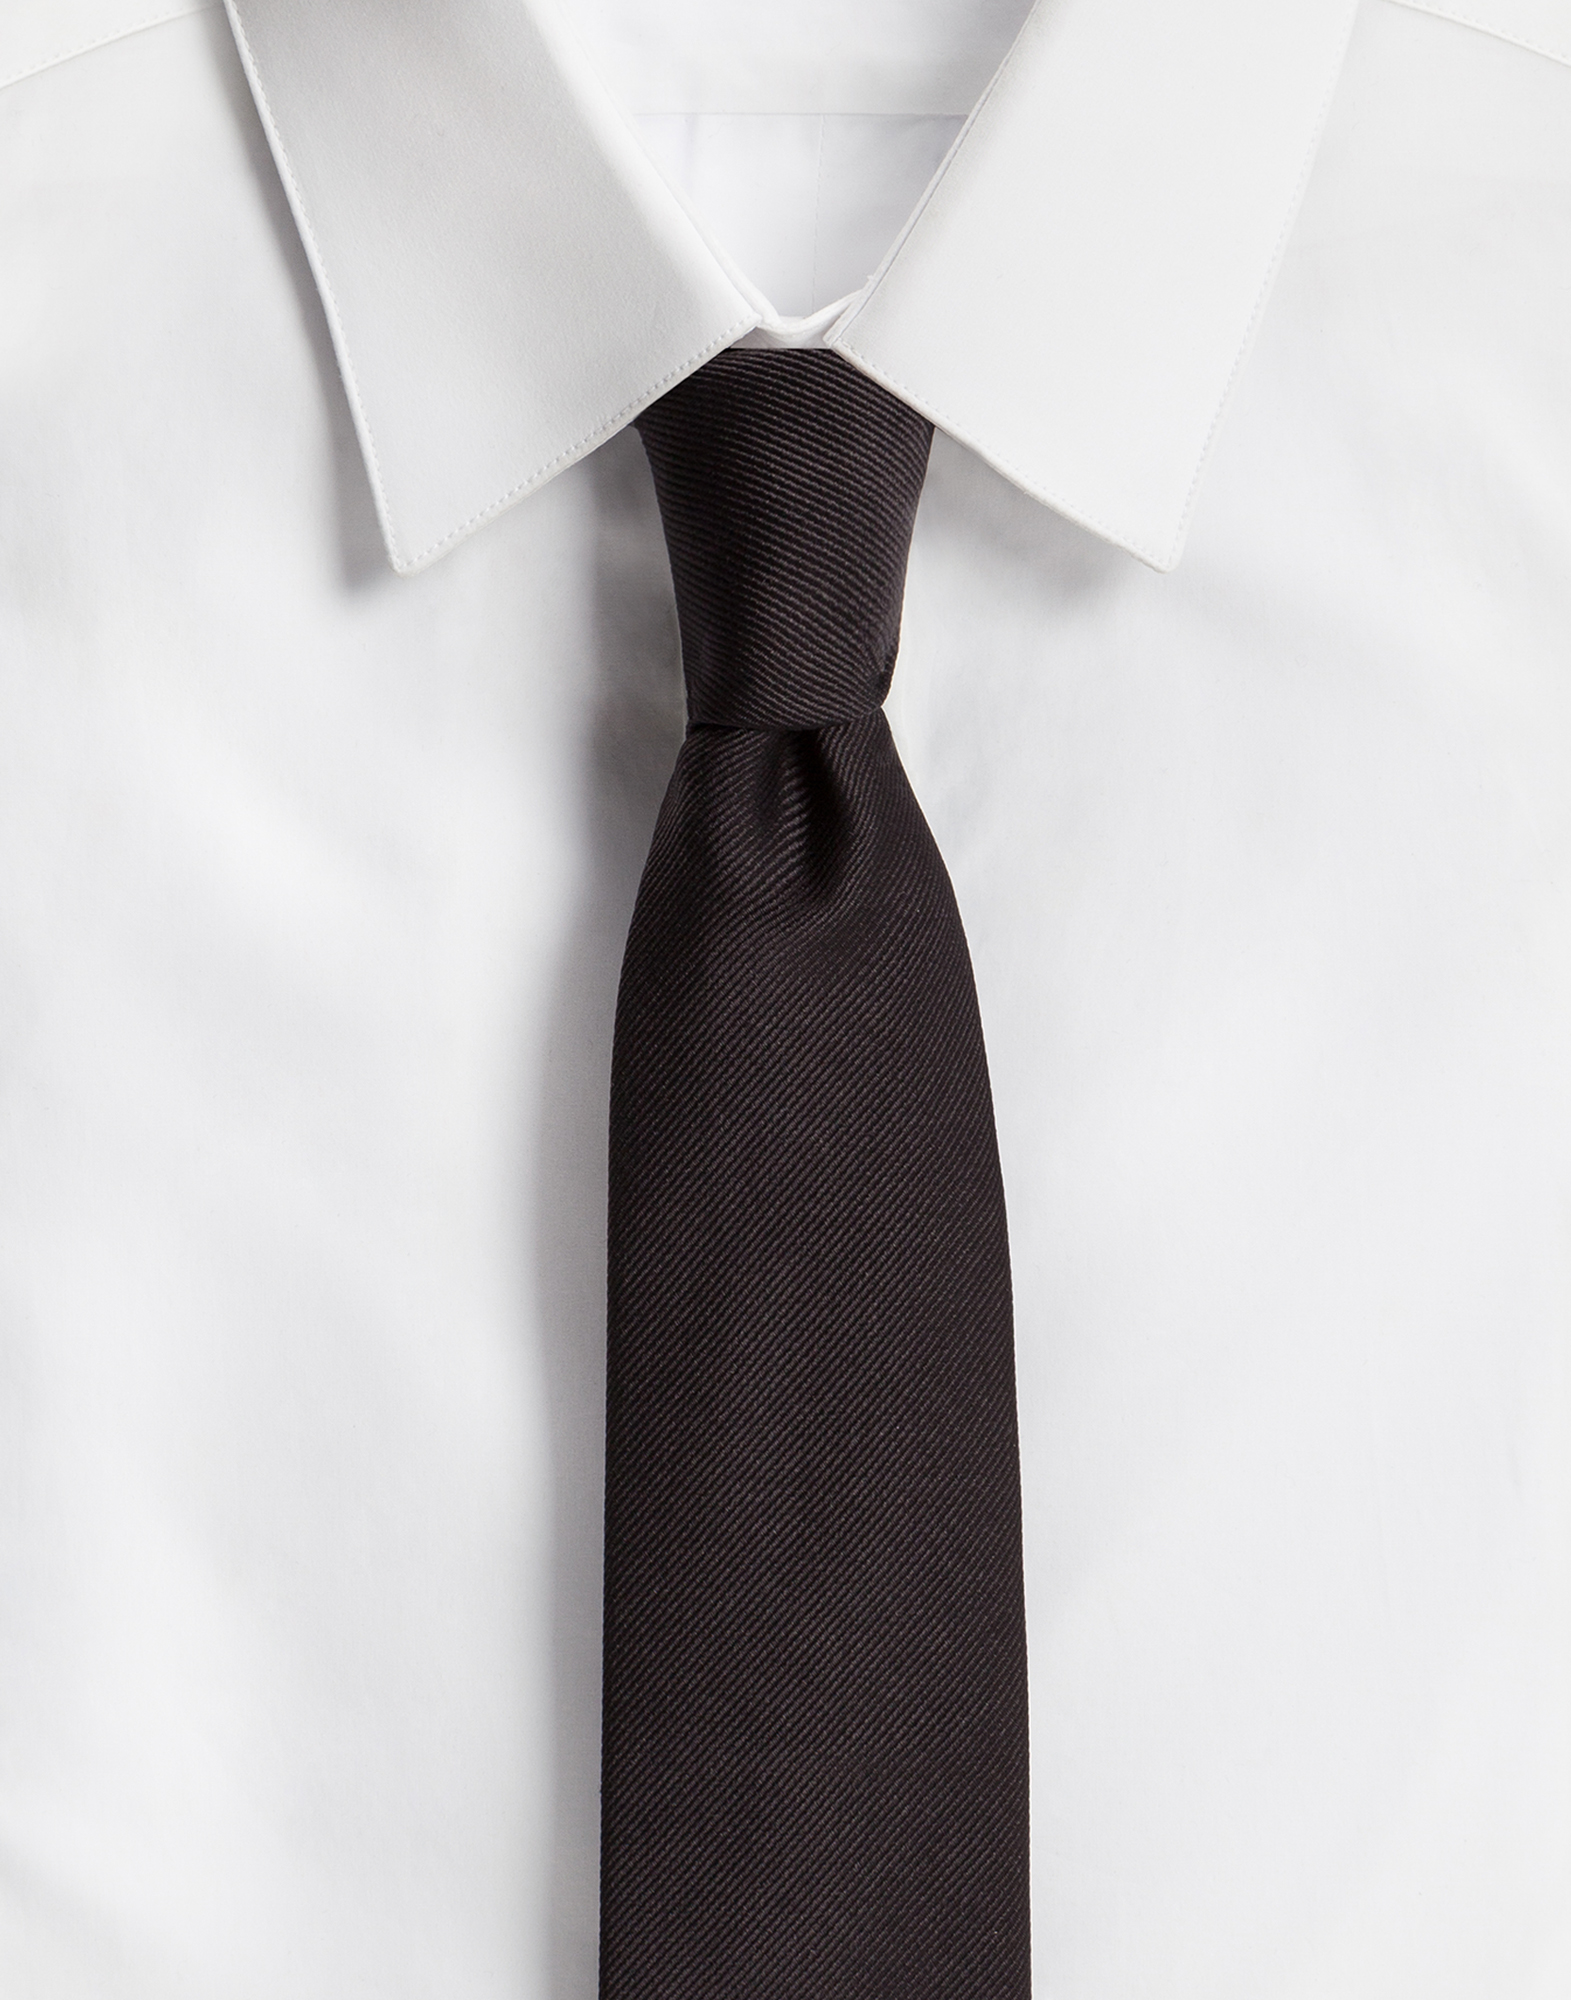 6 cm (24”) silk blade tie in Black